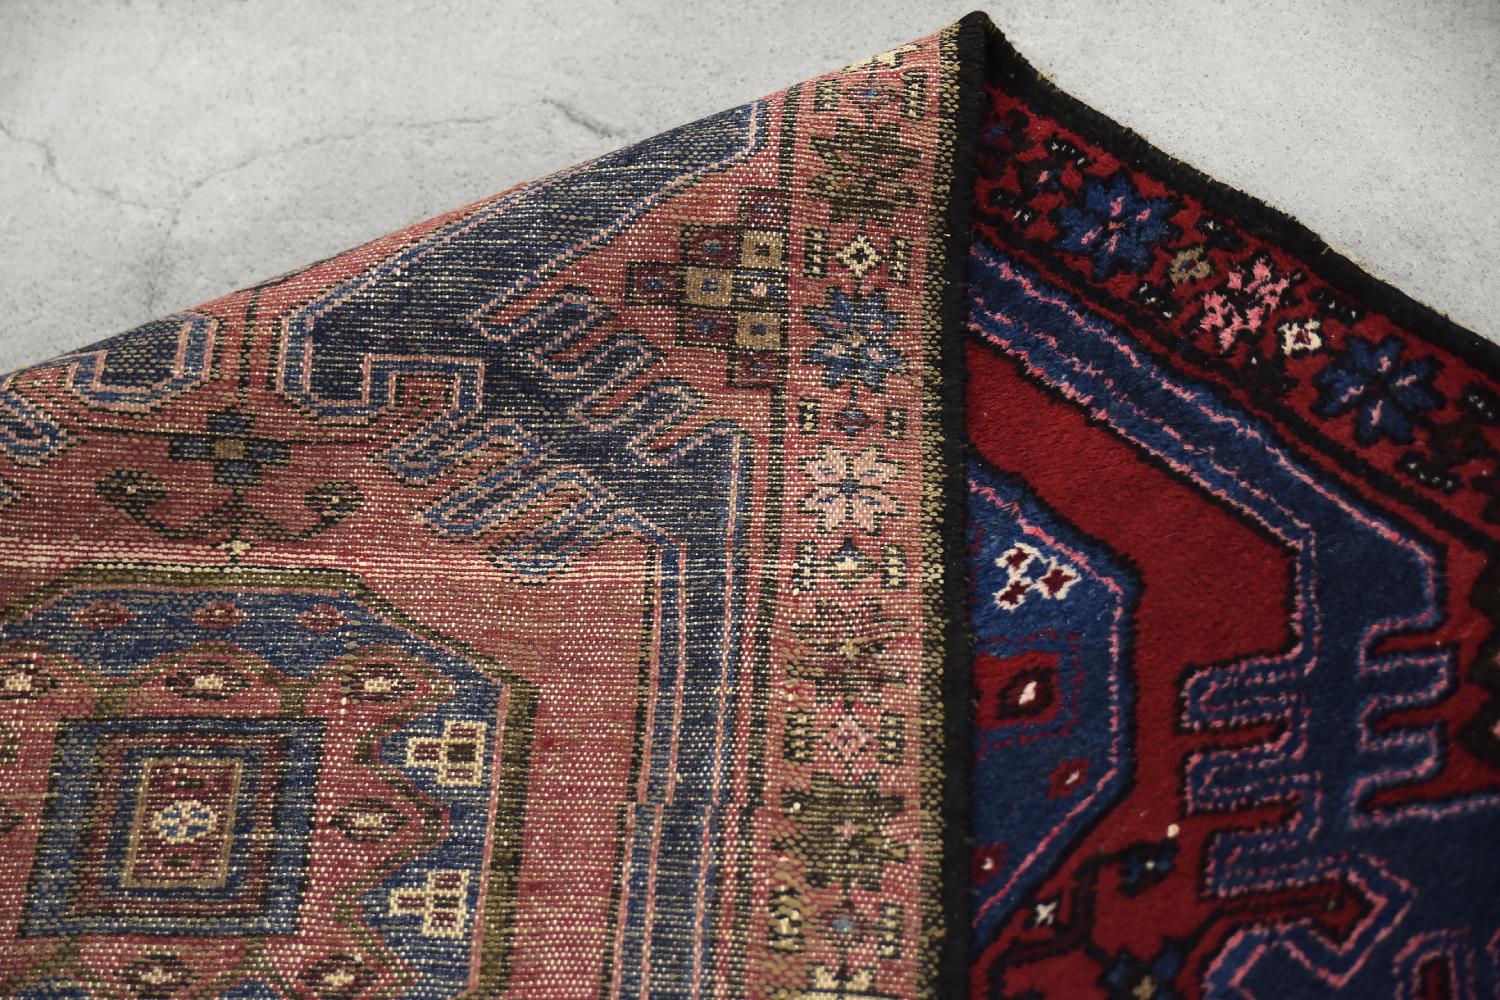 Mid-20th Century Original Vintage Hand-Woven Oriental Persian Carpet Hamadan Rug from Ikea, 1960s For Sale